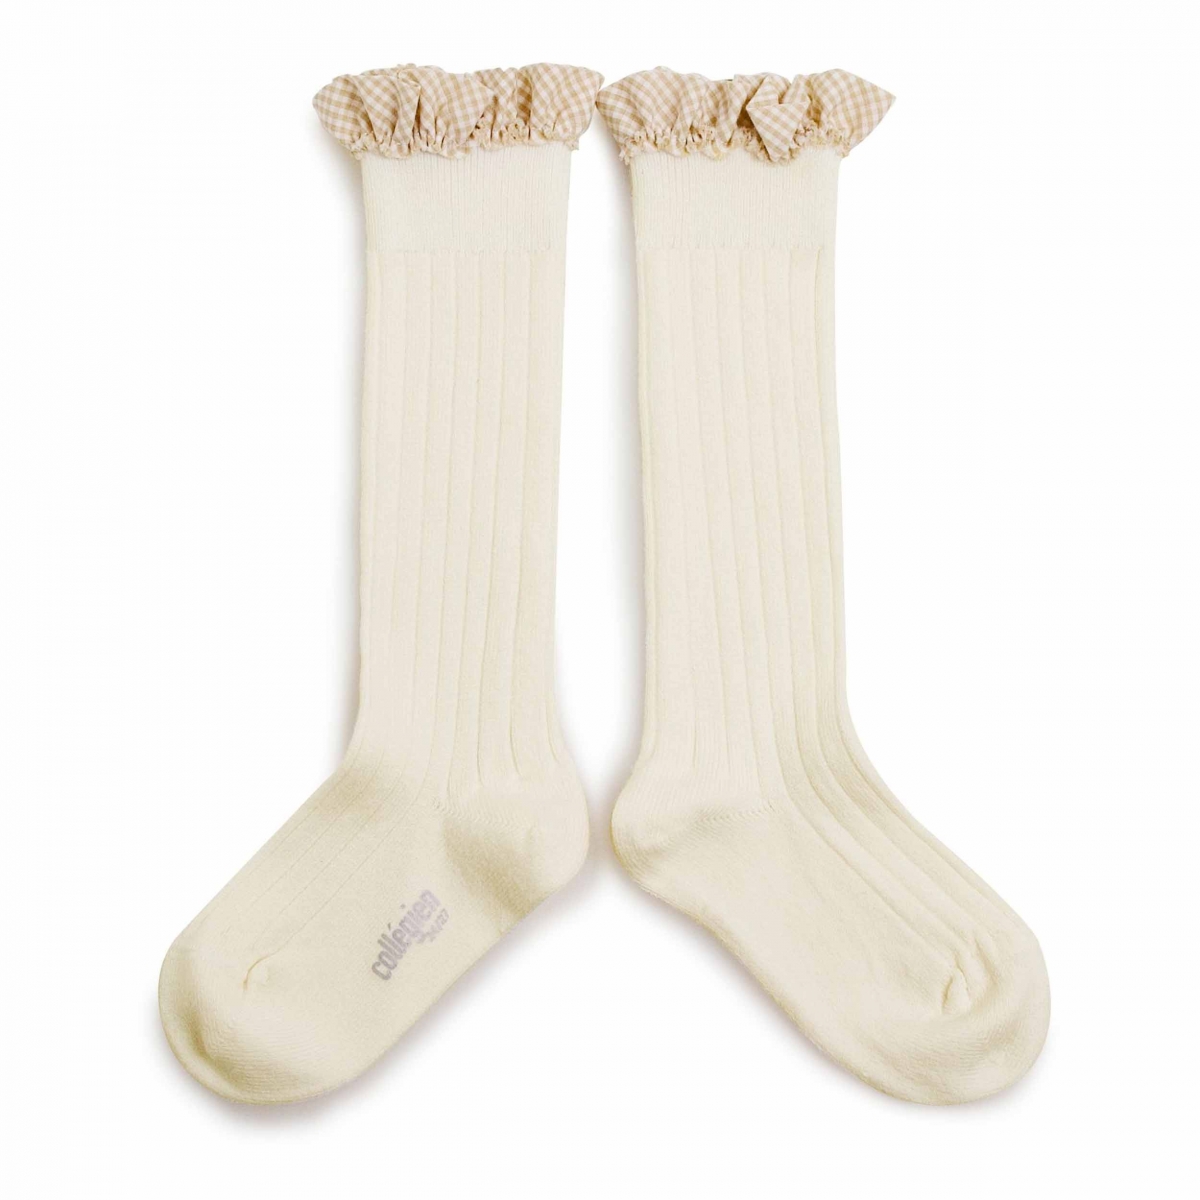 Collégien - Knee high socks Apolline doux agneaux - Tights & socks - 2961 037 Apolline 